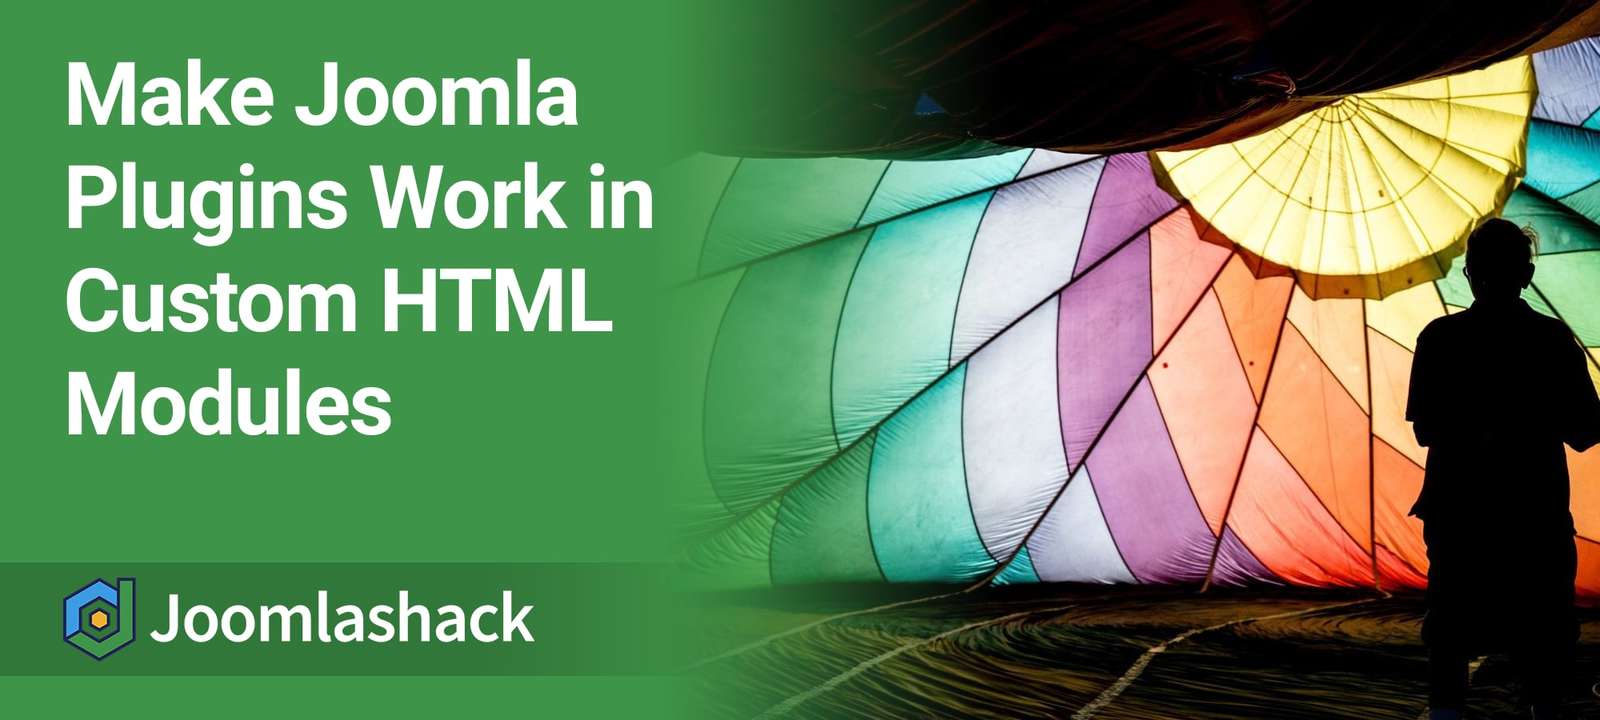 How to Make Joomla Plugins Work in Custom HTML Modules